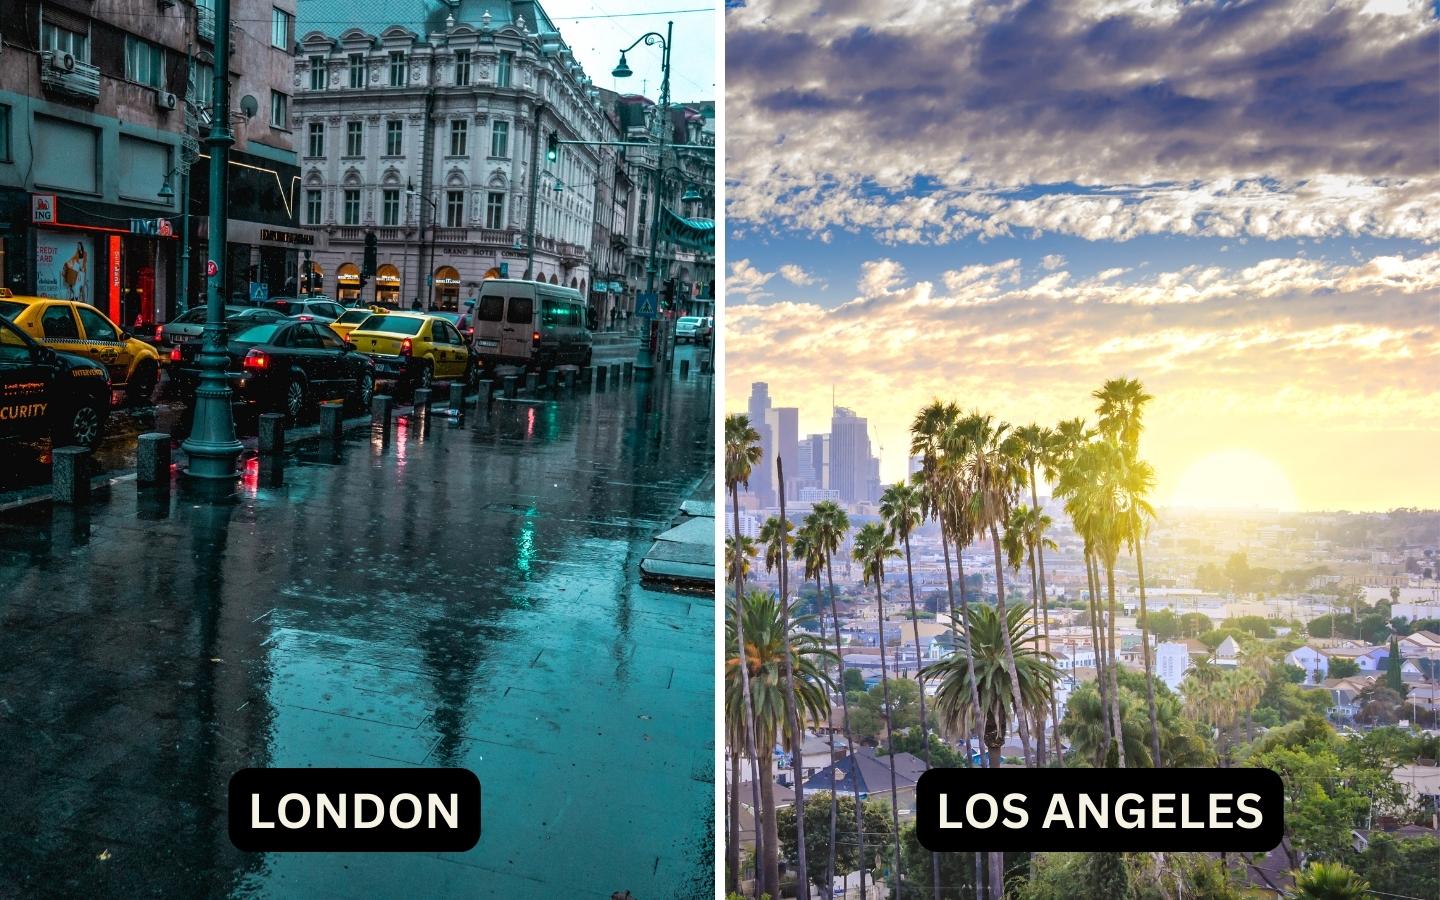 London Vs Los Angeles weather